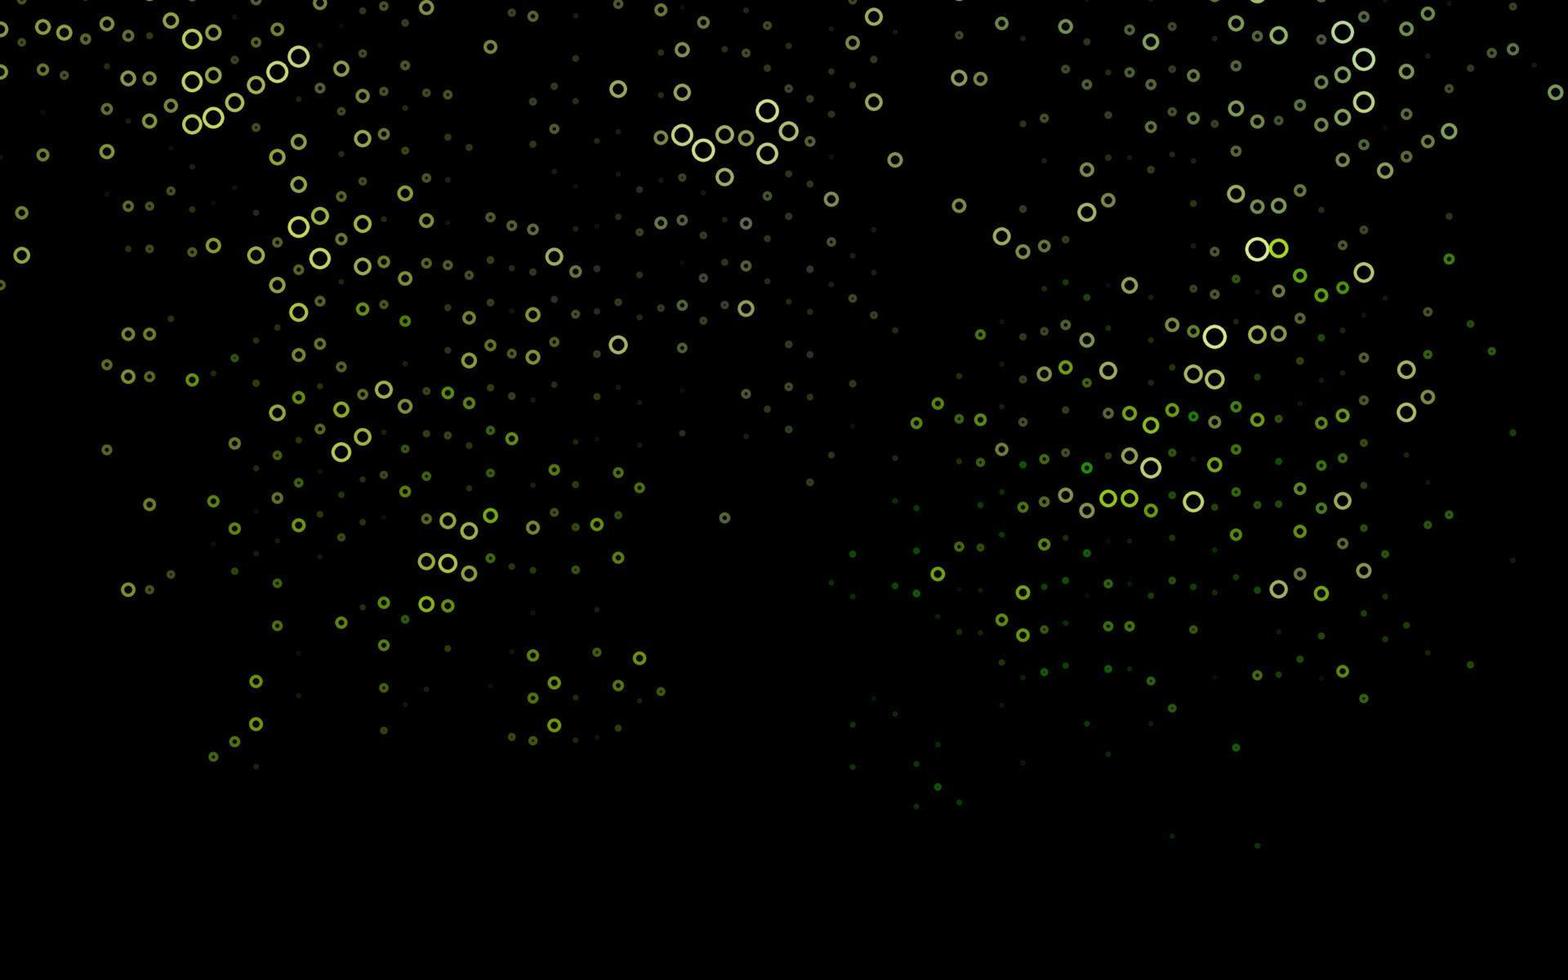 Dark Green vector pattern with spheres.